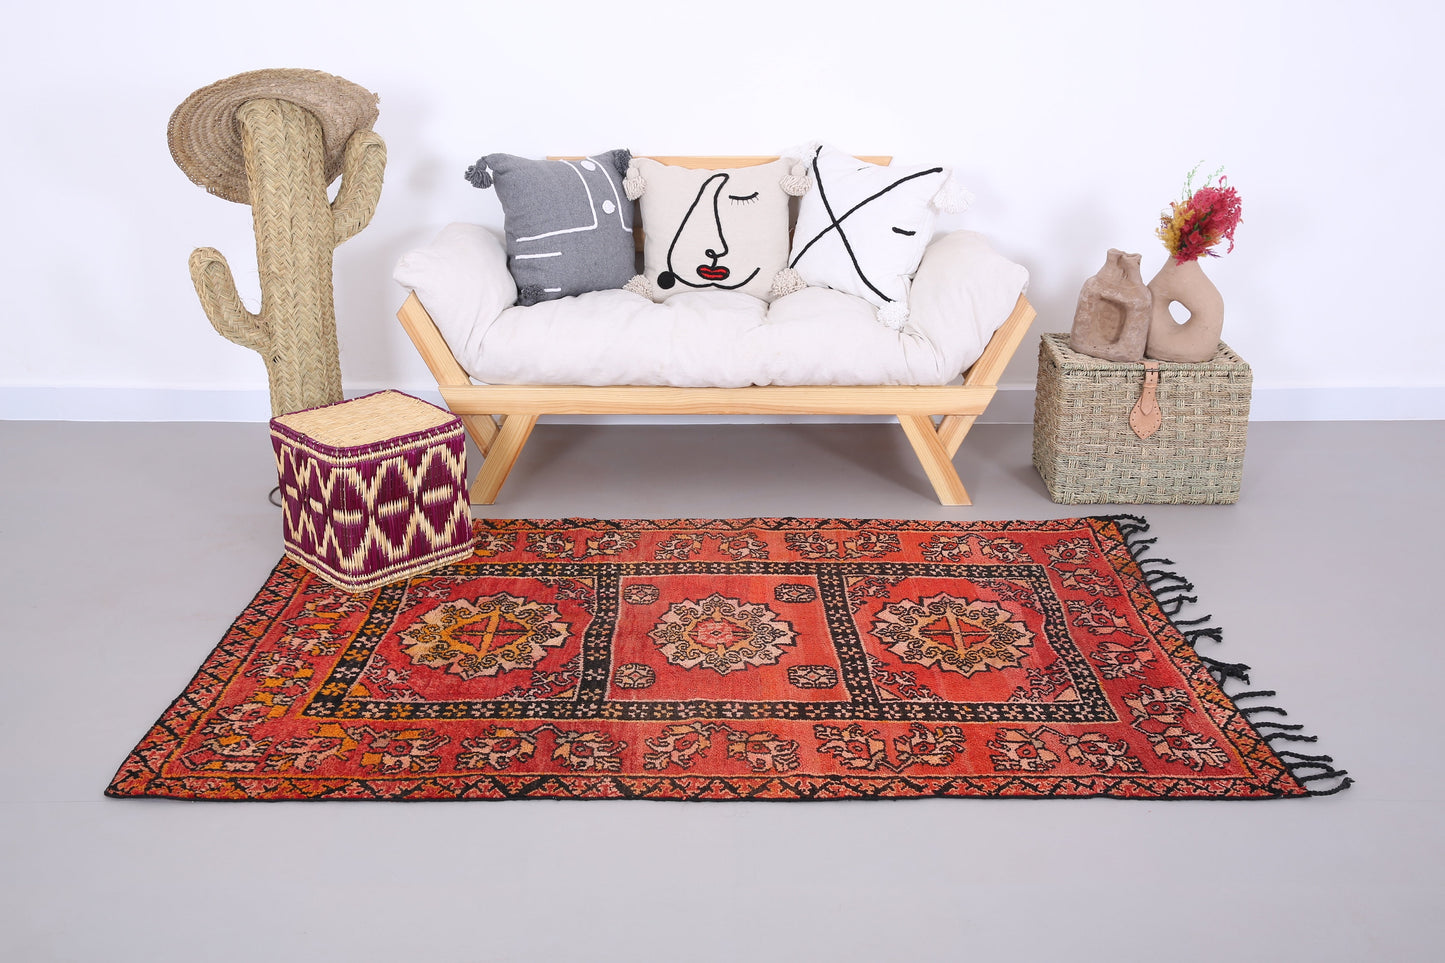 Roter marokkanischer handgewebter Teppich 4 FT x 7,2 FT - kleiner Berberteppich - kleiner marokkanischer Teppich - handgefertigter Berberteppich - Vintage marokkanischer Boho-Teppich